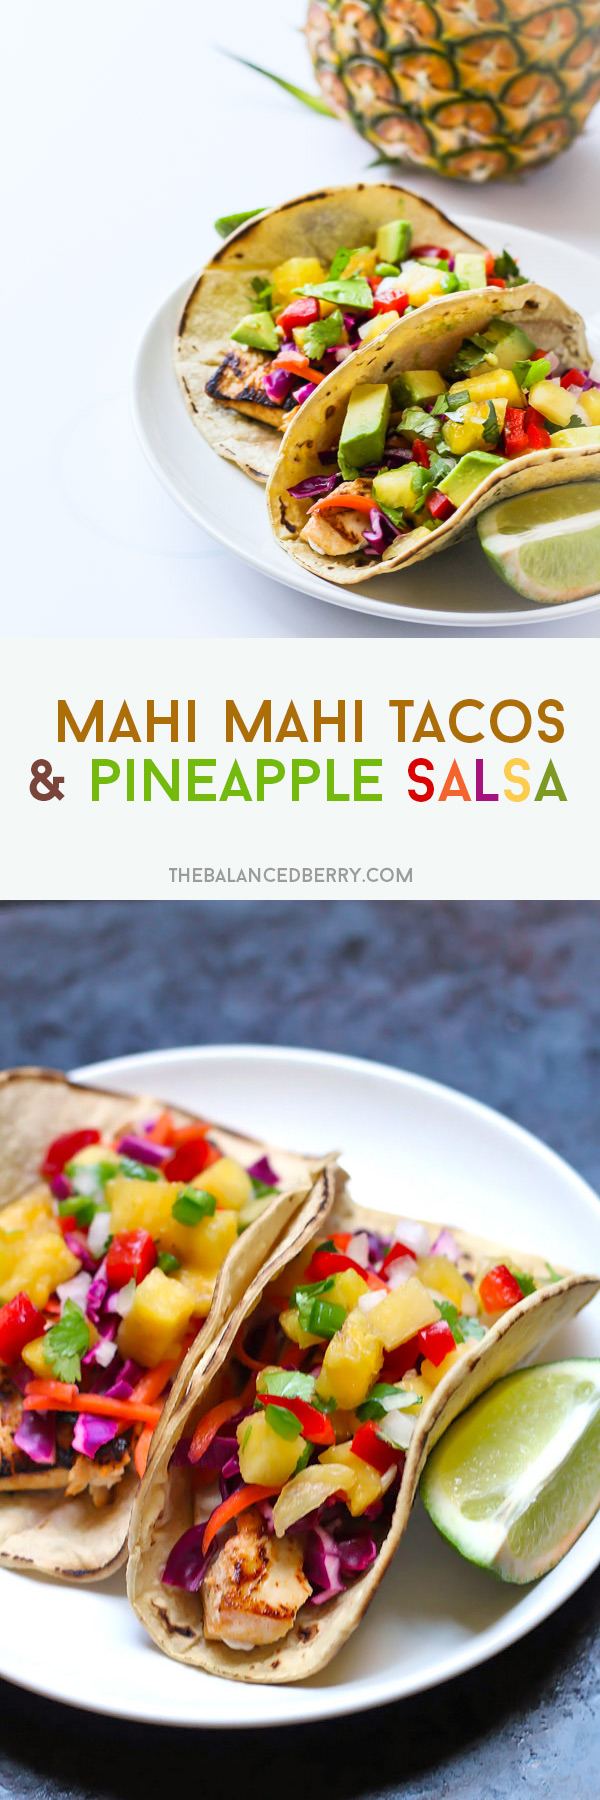 Mahi Mahi Tacos with Pineapple Salsa via thebalancedberry.com